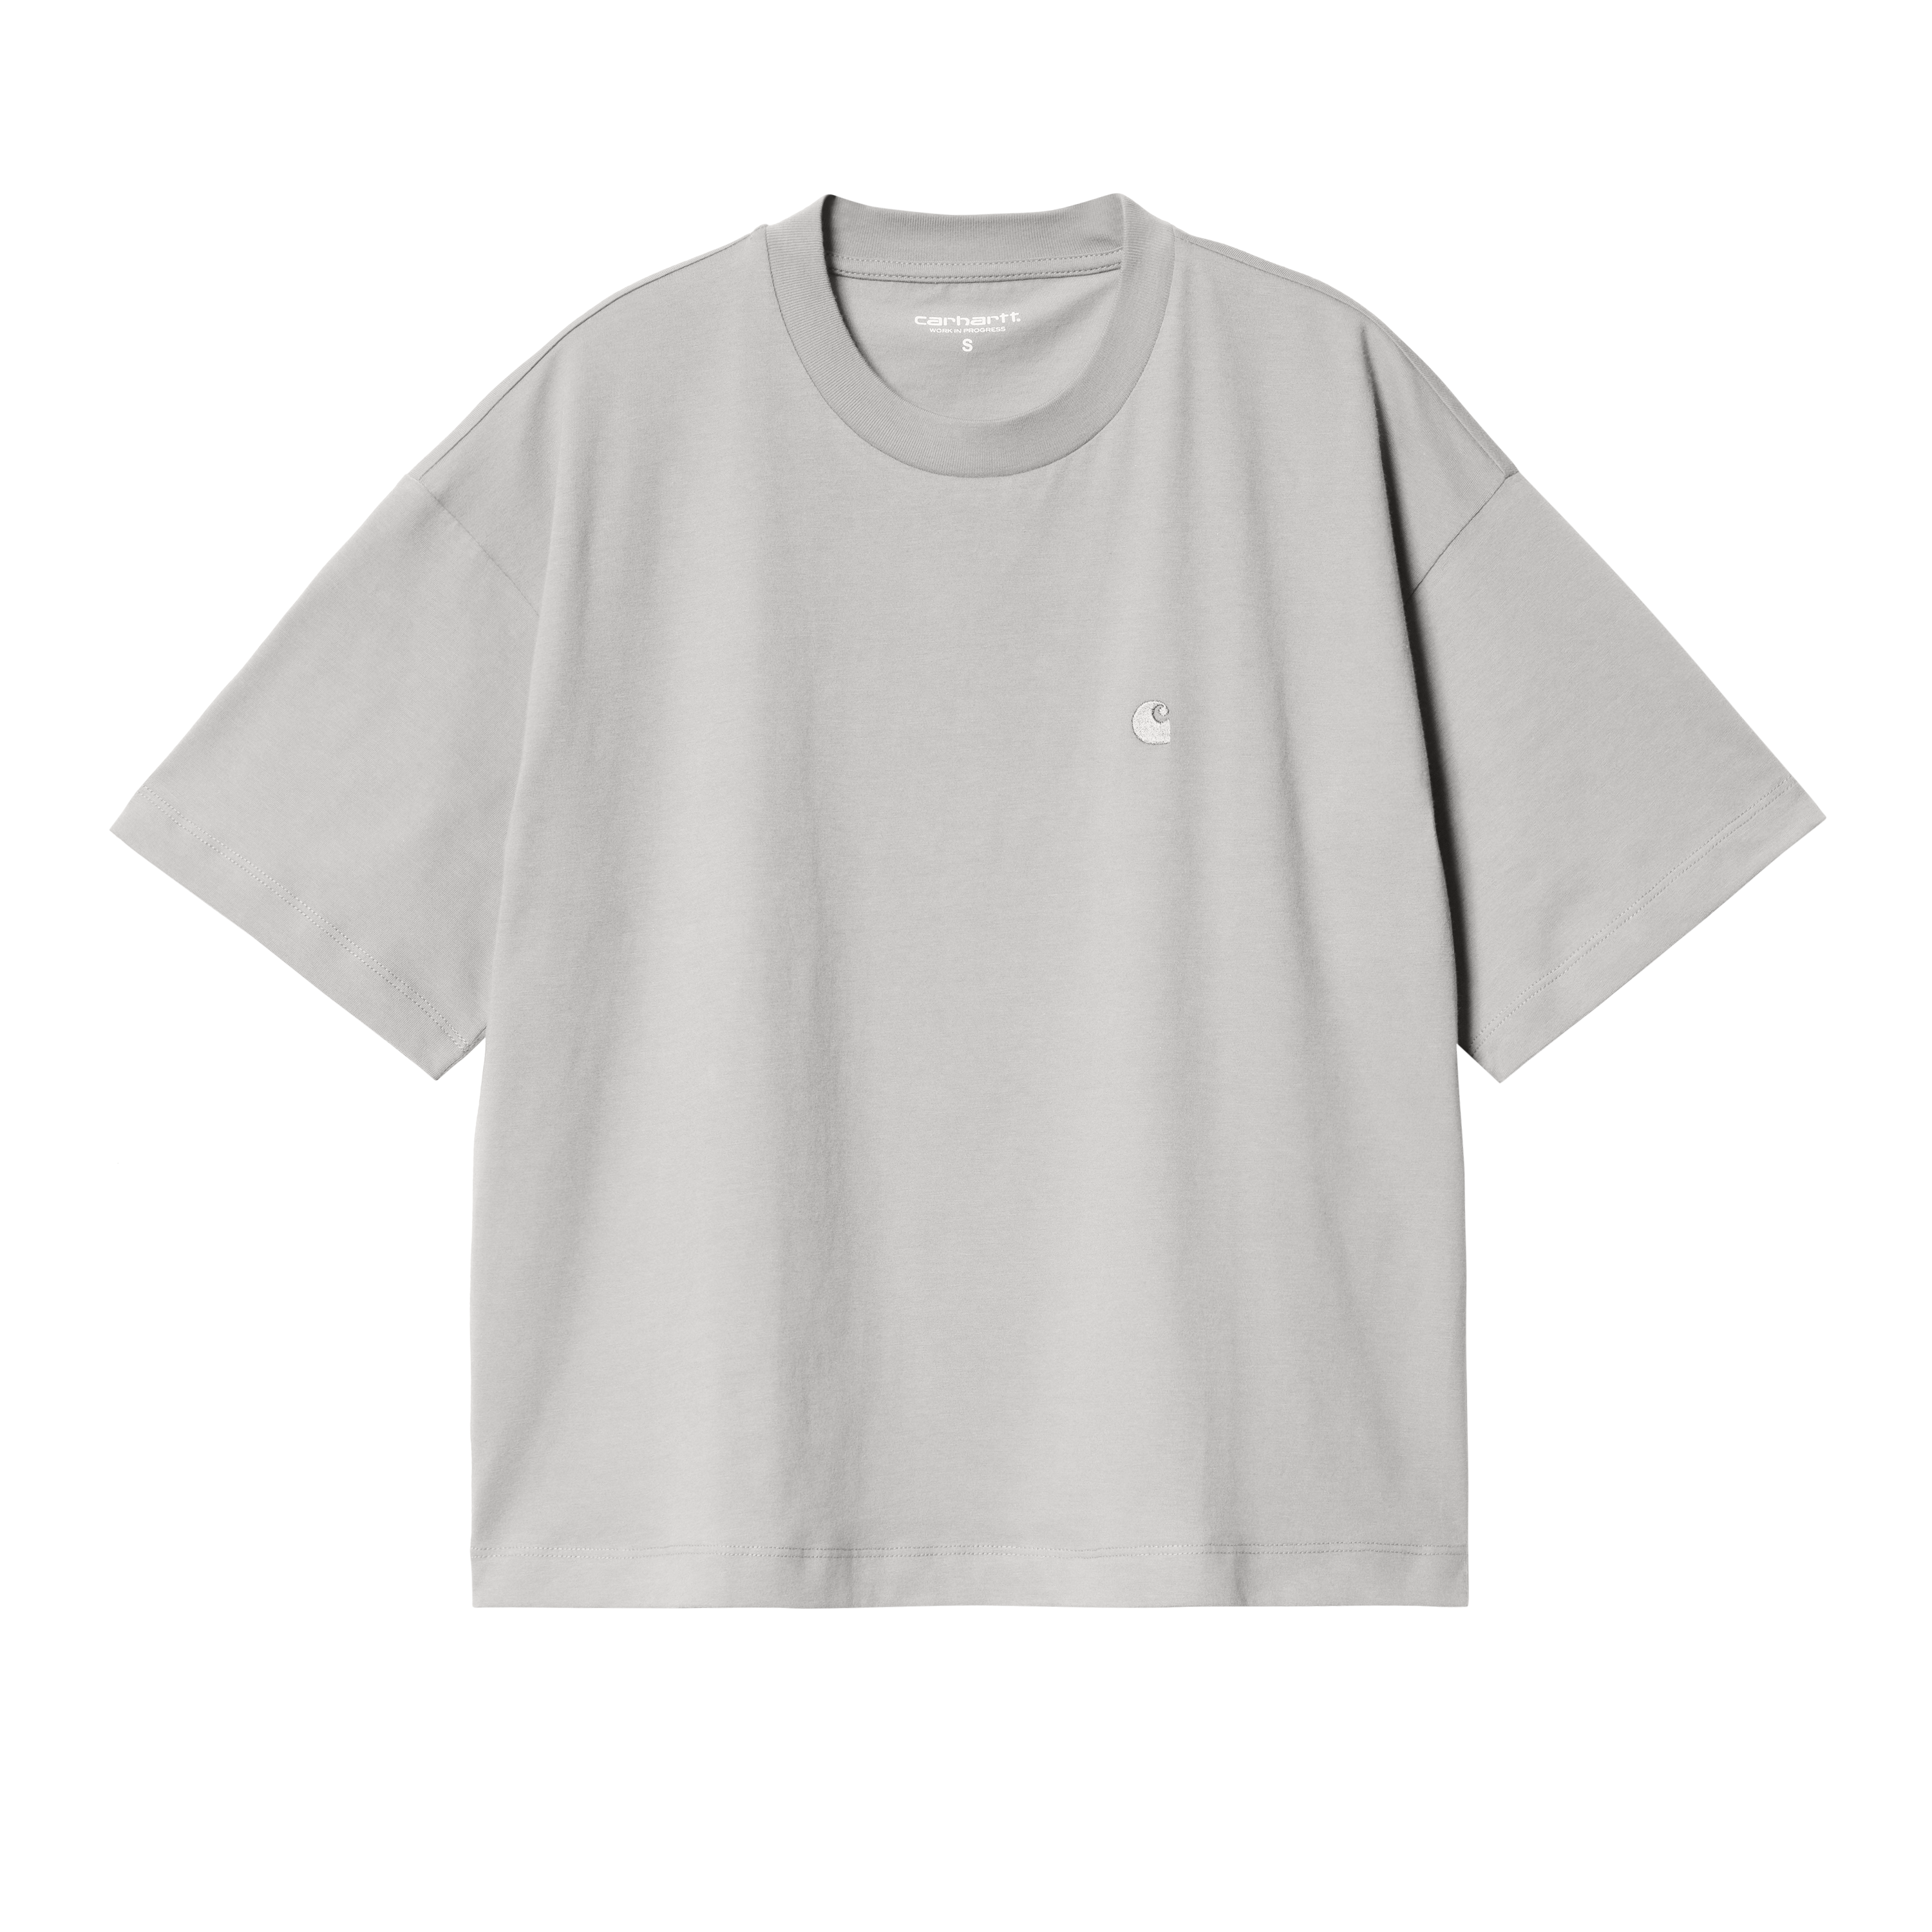 Carhartt WIP Women’s Short Sleeve Chester T-Shirt in Grey